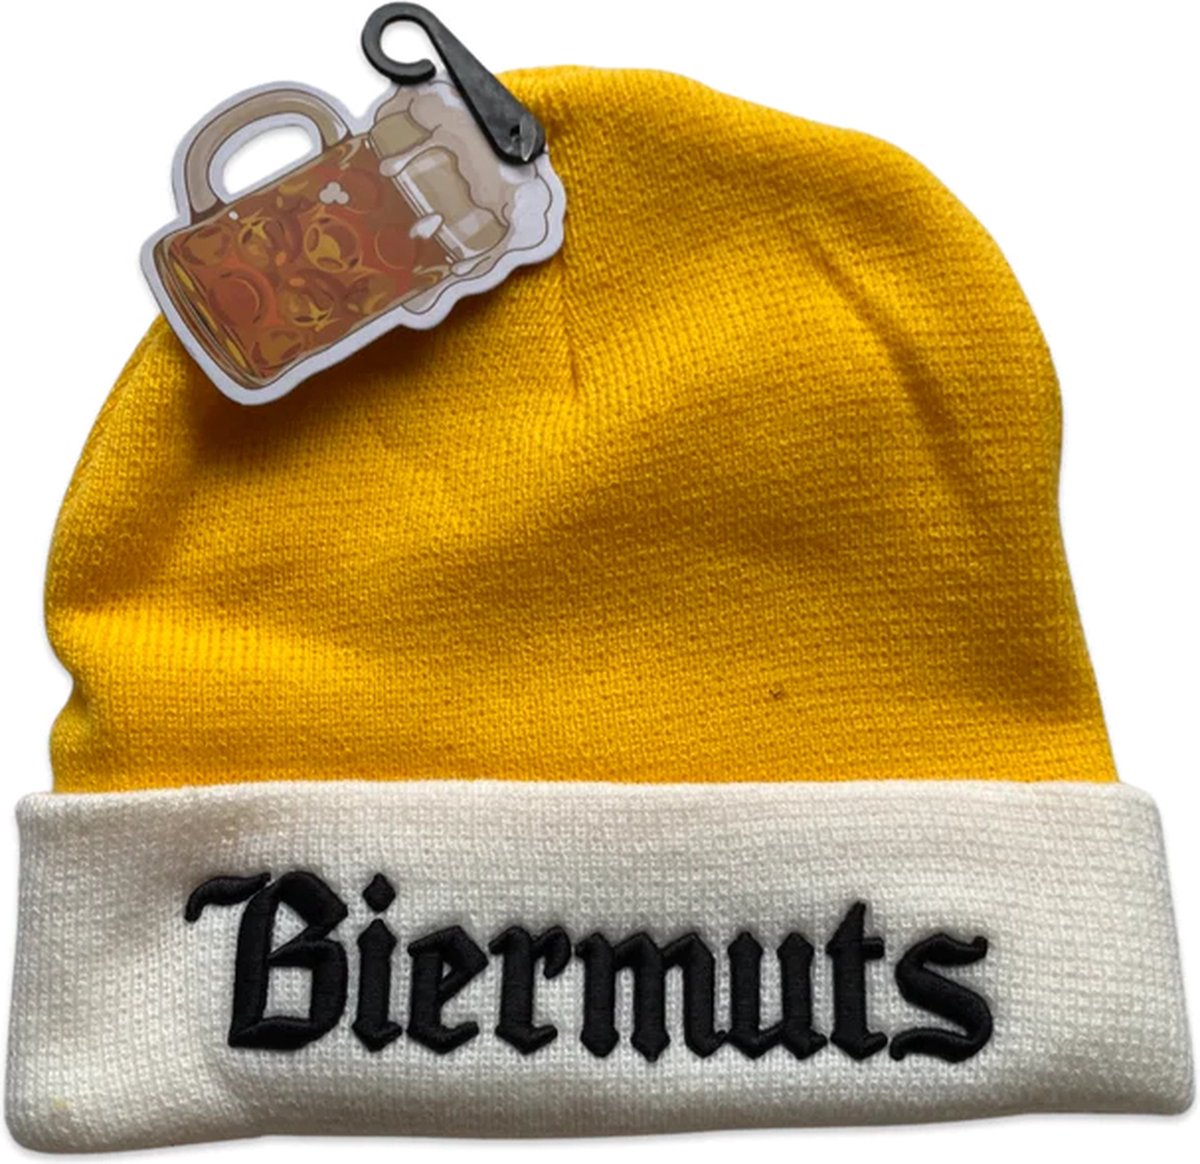 Biermuts - Bier - Muts - Carnaval - Party - Kleding